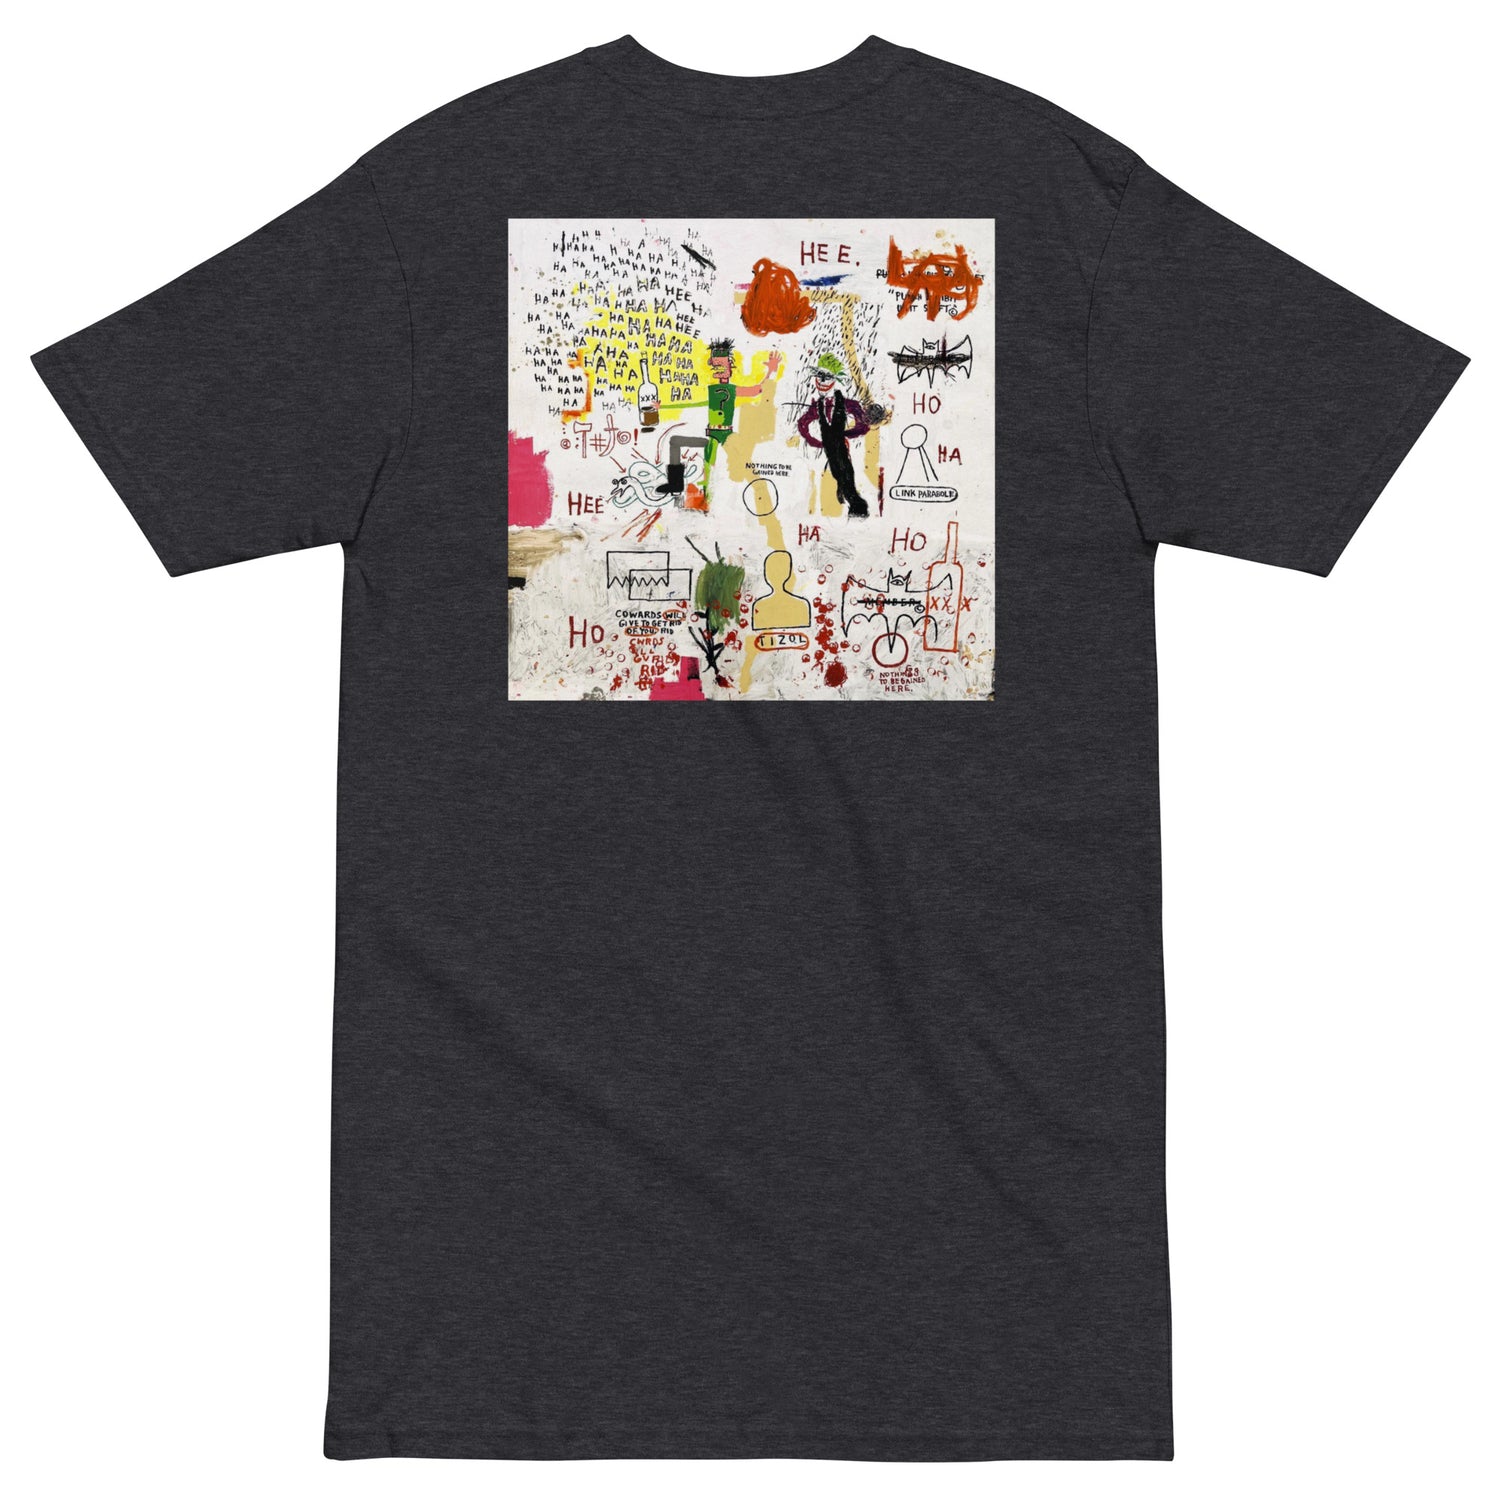 Jean-Michel Basquiat "Riddle Me This Batman" Artwork Printed Premium Streetwear Crewneck T-shirt Charcoal Grey